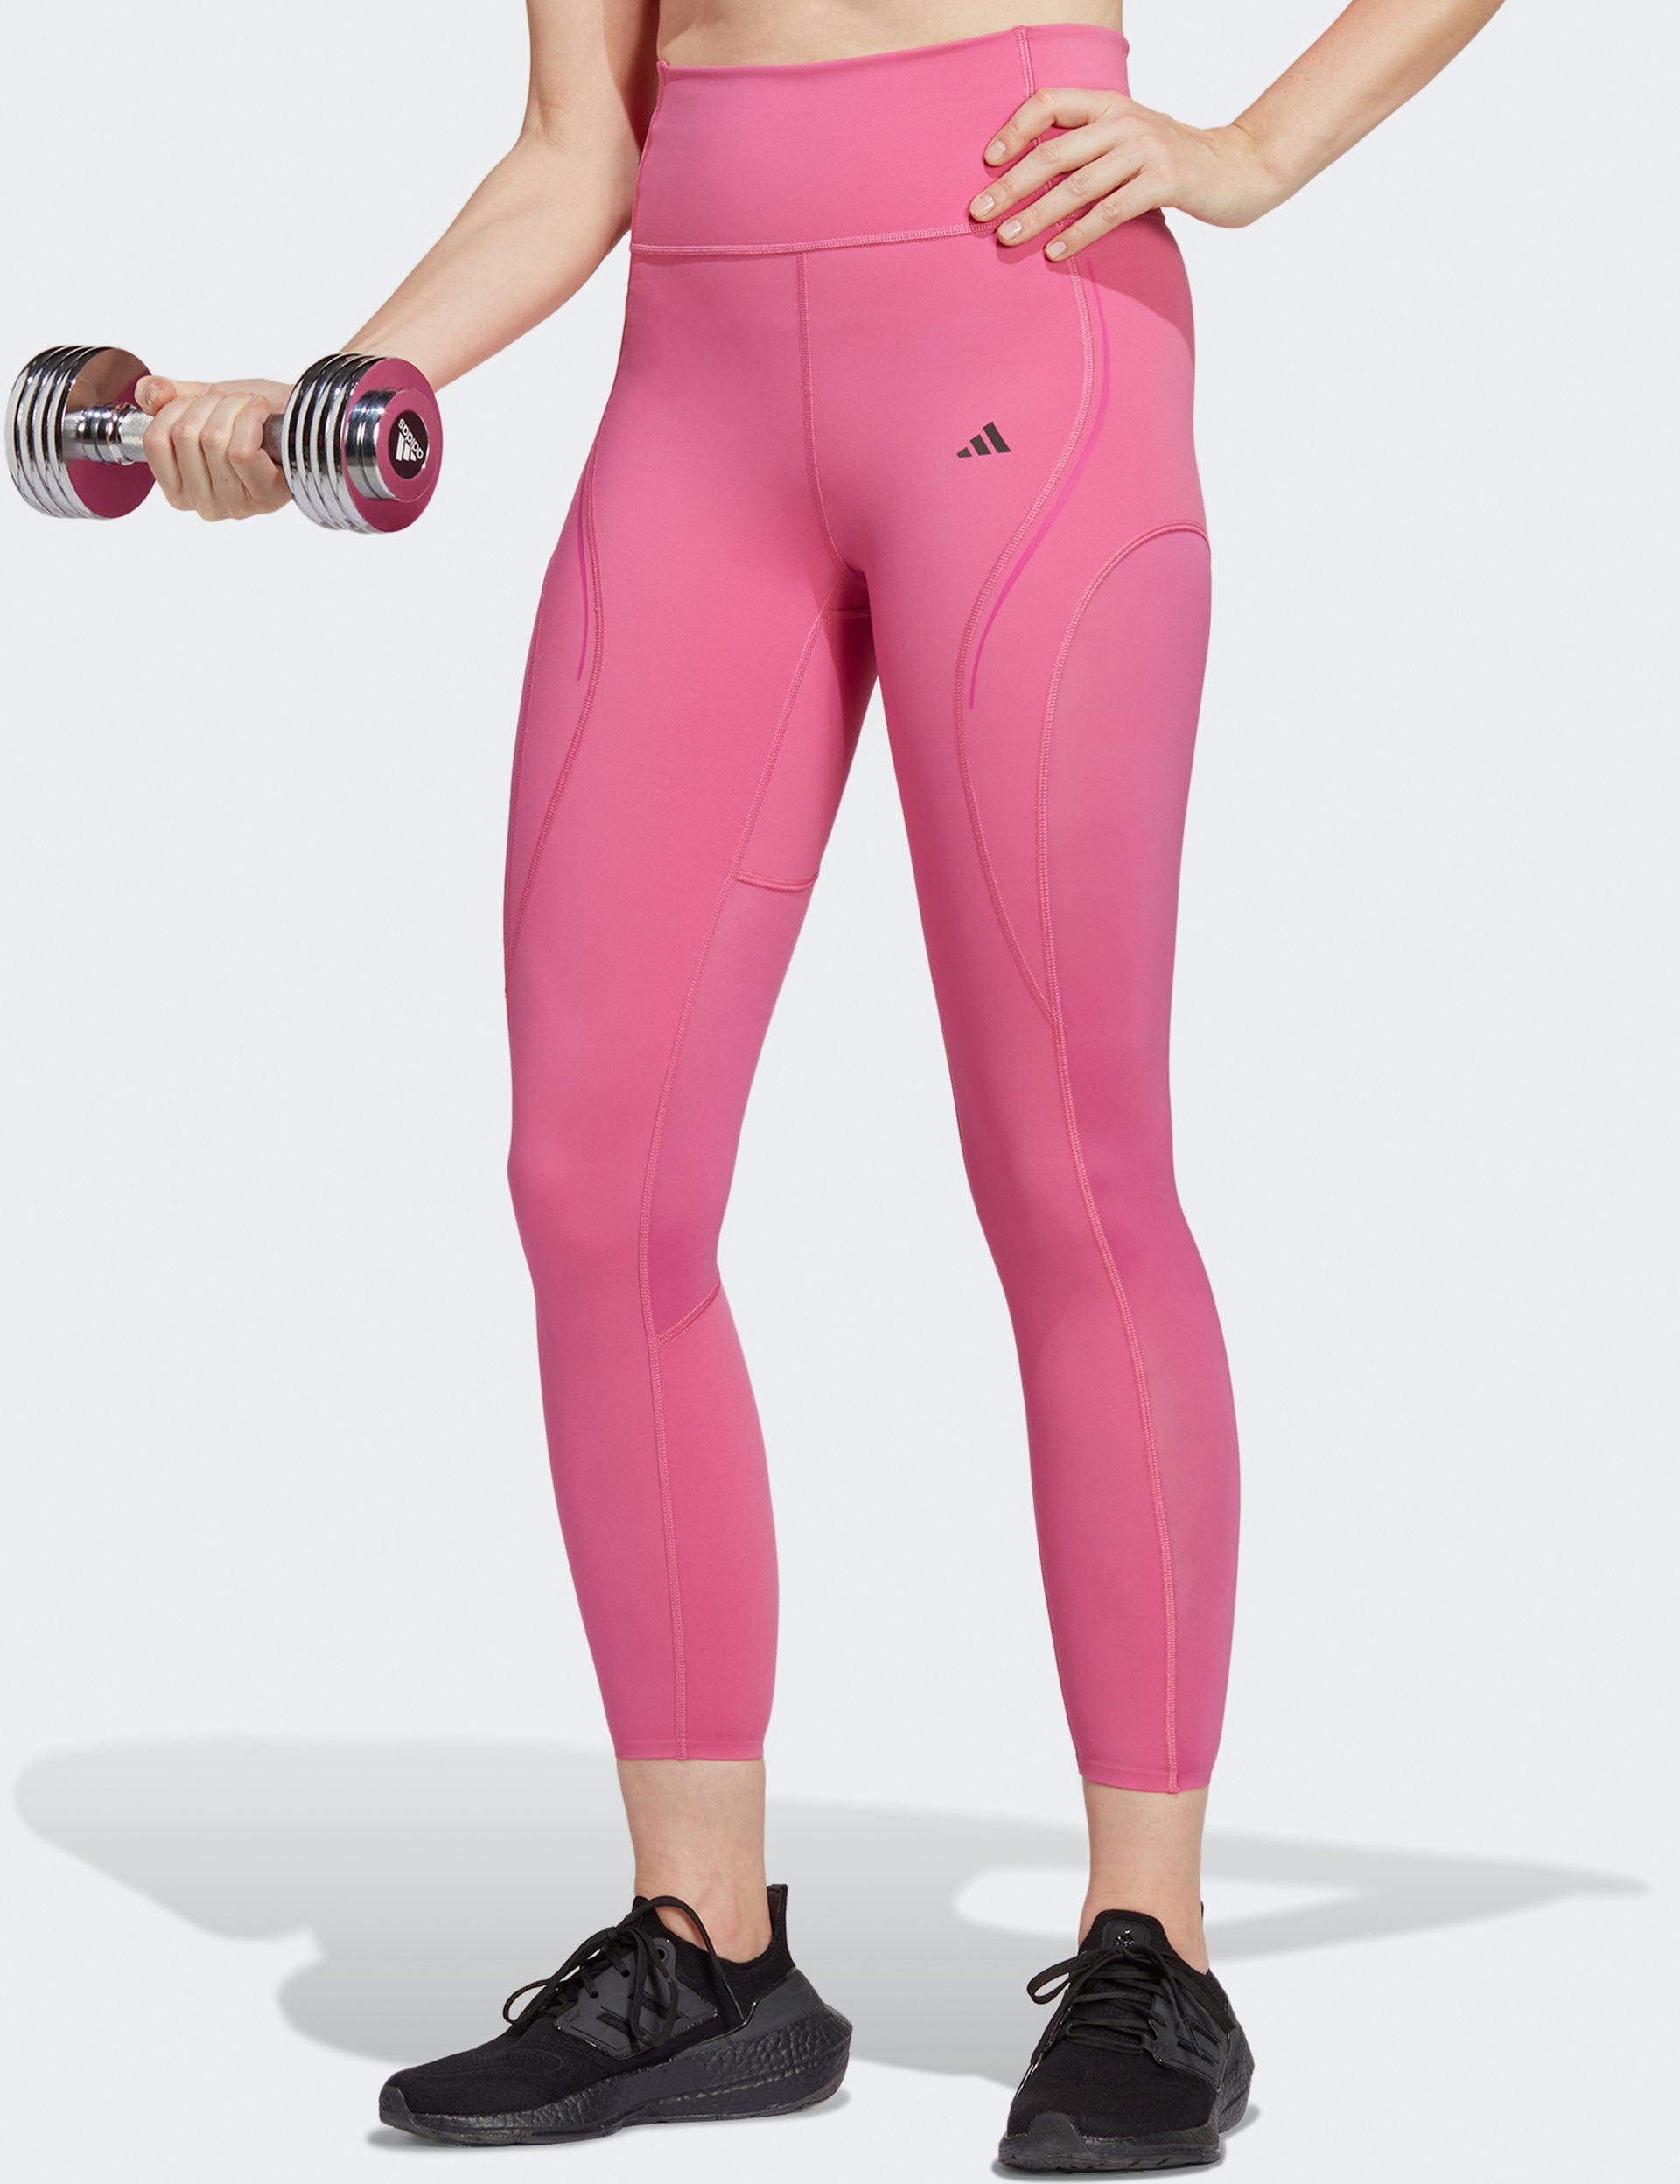 Hurley Women's Sport Block Hybrid Legging, Pink, Medium : :  Clothing, Shoes & Accessories